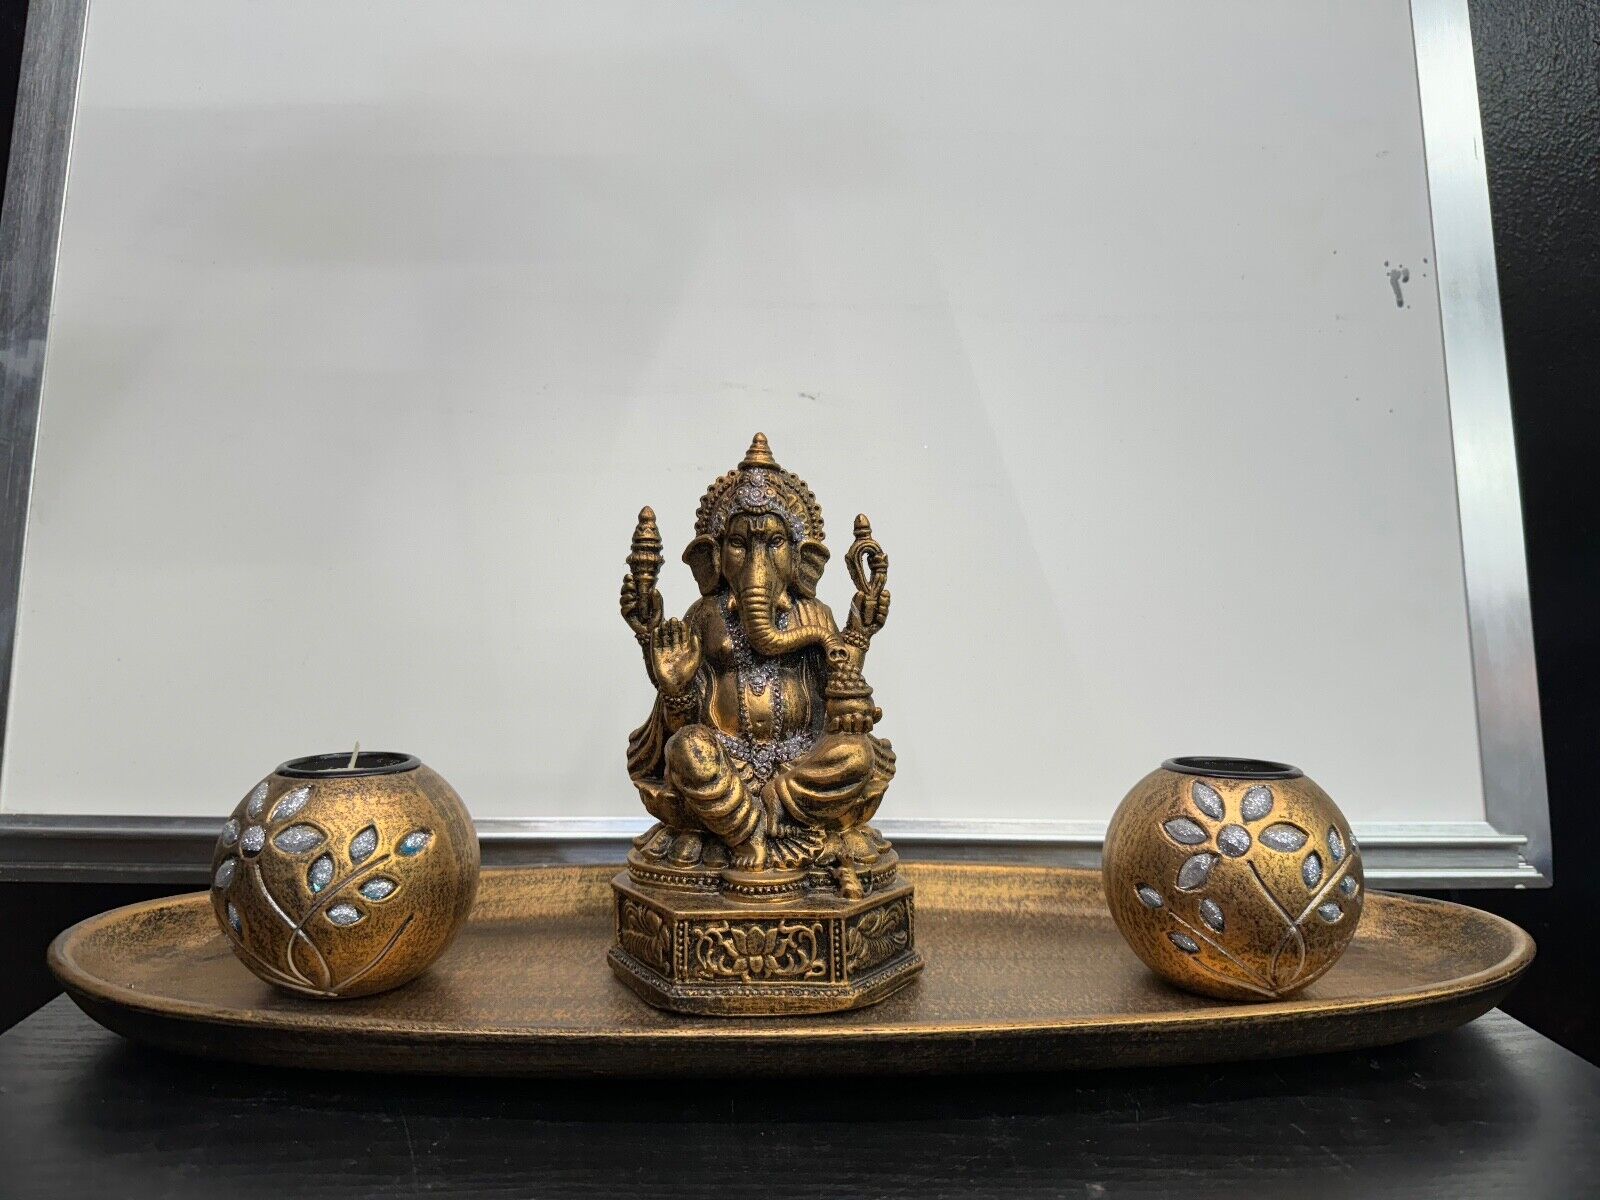 Lord Ganesha Statue With Illuminating Candles-Spiritual Home Decor ,Hindu God.